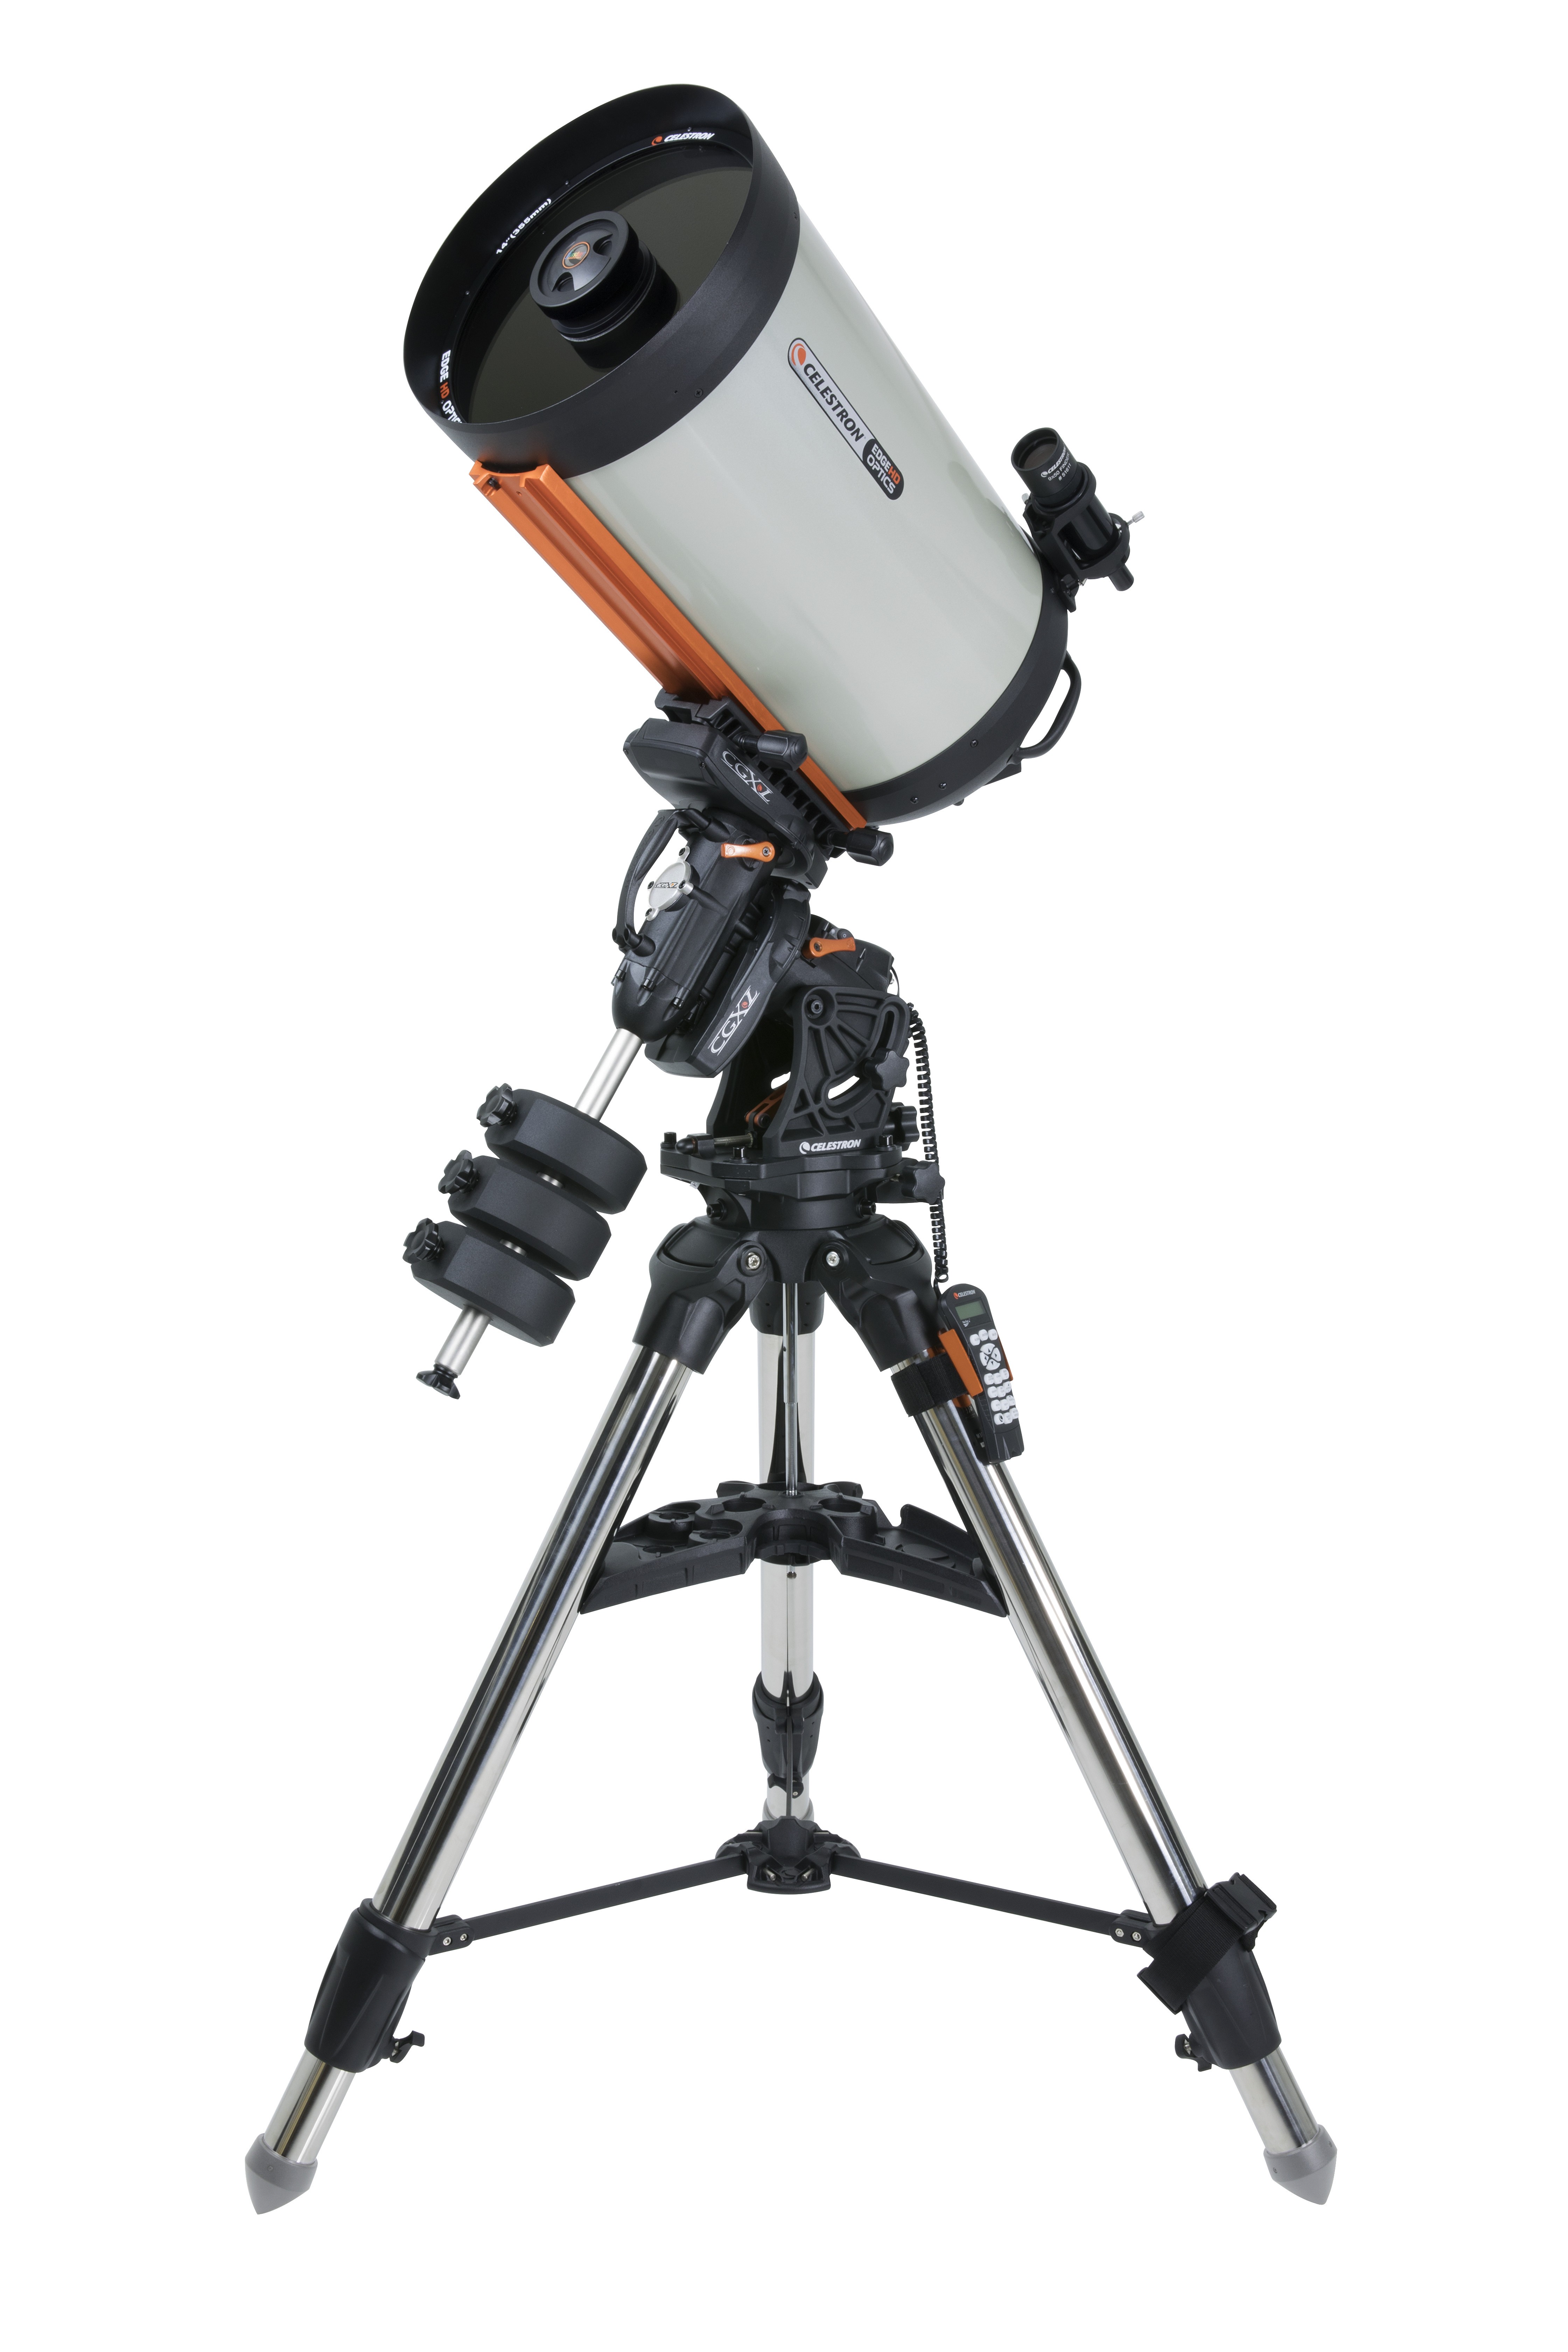 Celestron CGX-L Equatorial 1400 EdgeHD Telescope